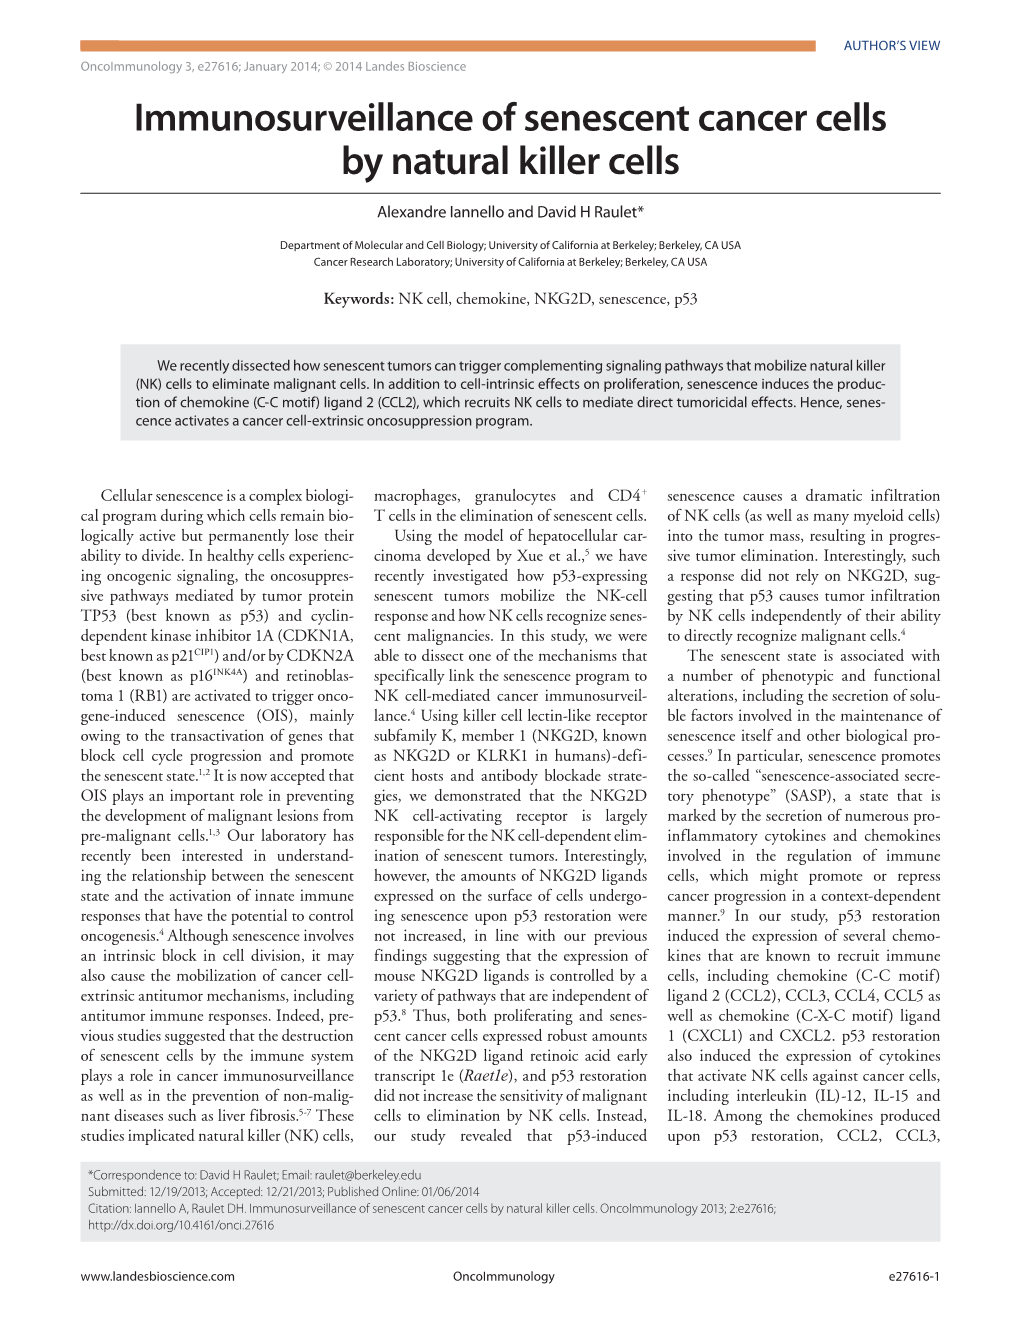 Immunosurveillance of Senescent Cancer Cells by Natural Killer Cells